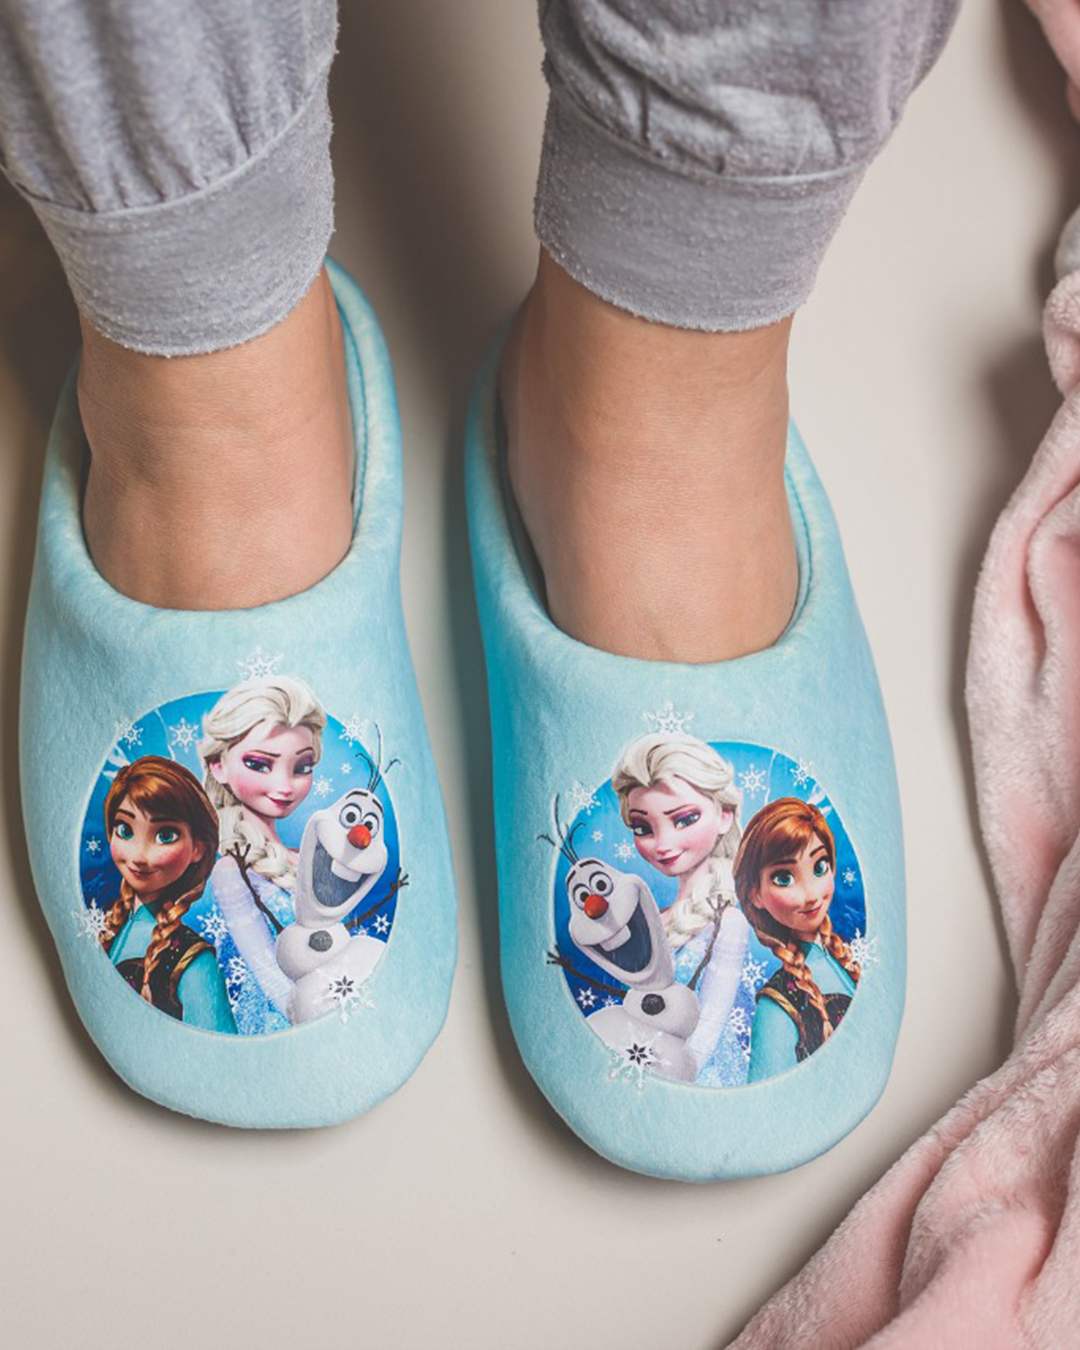 Pantofly Frozen & Elsa, girls and women